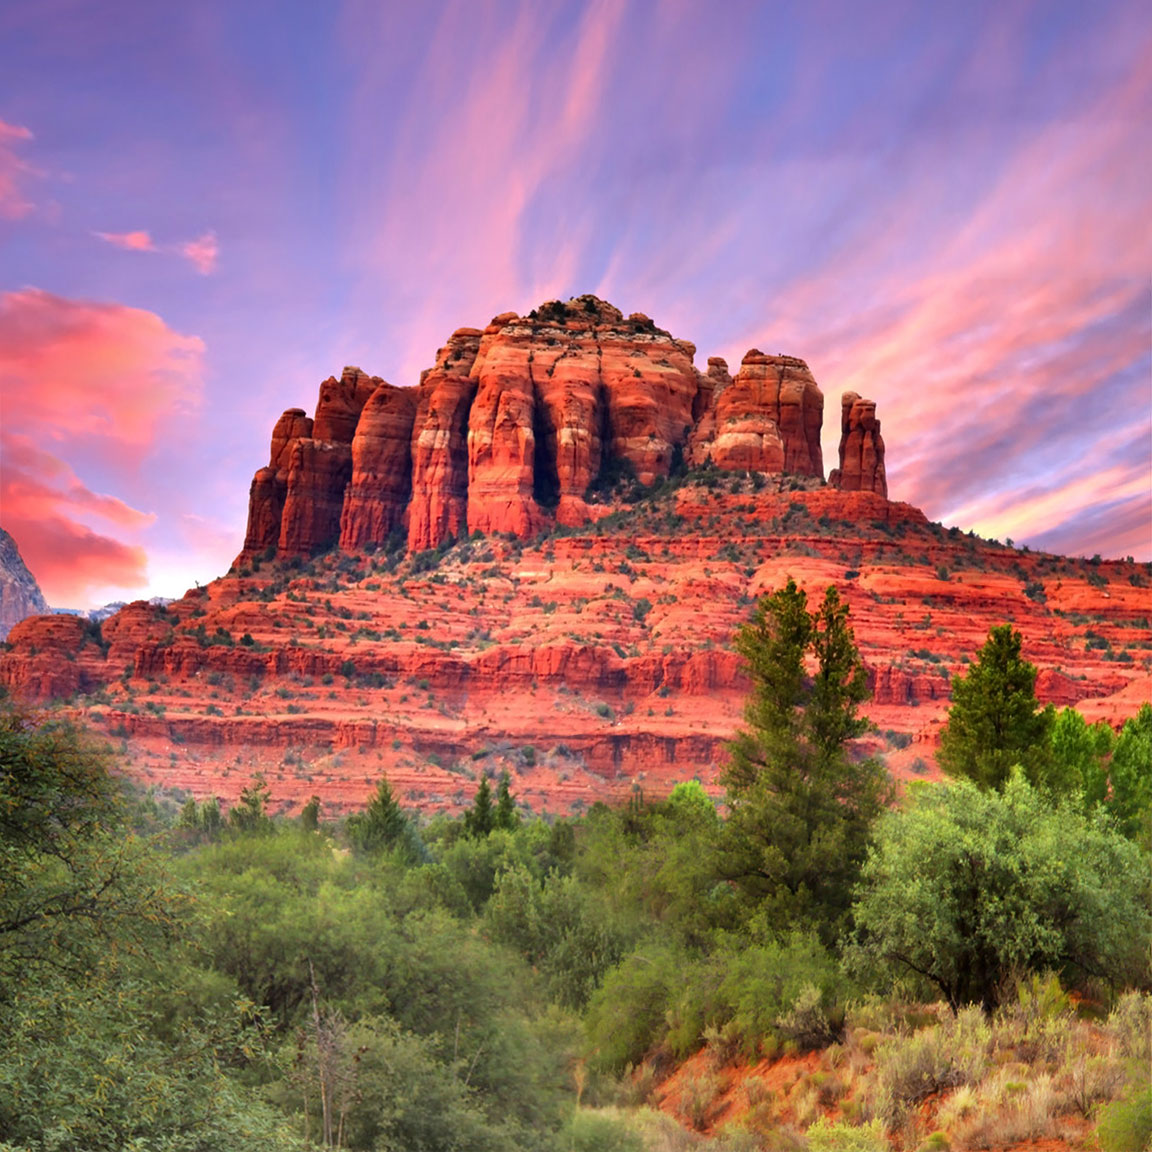 Albums 105+ Images Beautiful Pictures Of Sedona Arizona Full HD, 2k, 4k